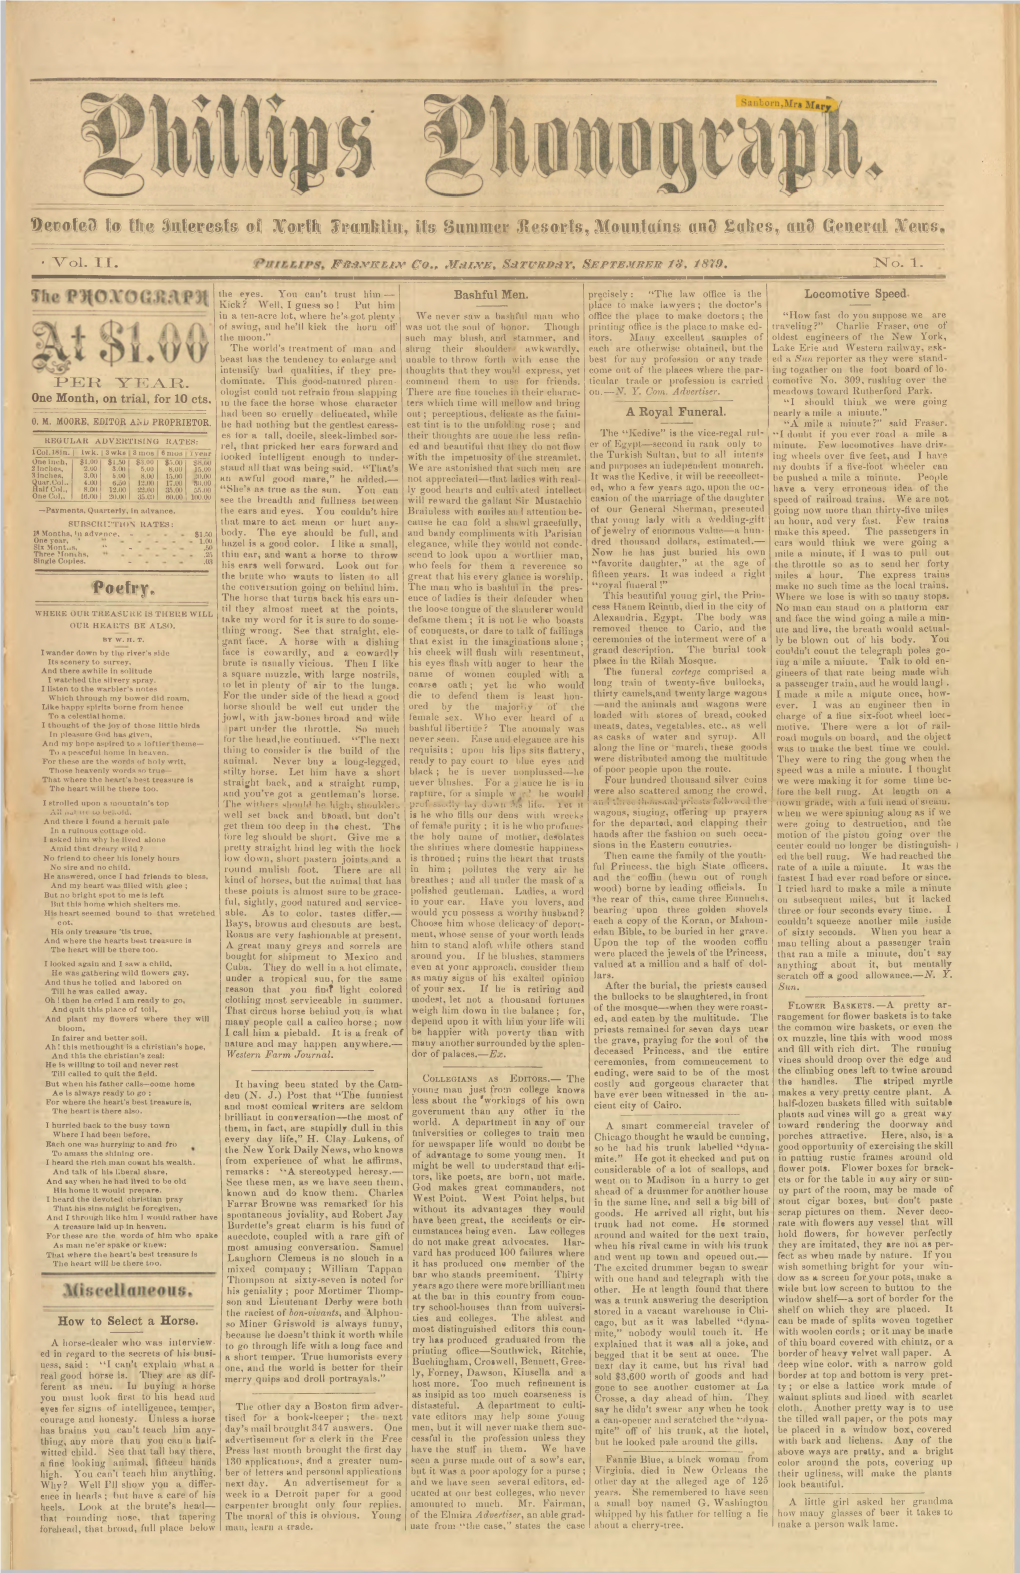 Phillps Phonograph : Vol. 2, No. 1 September 13,1879